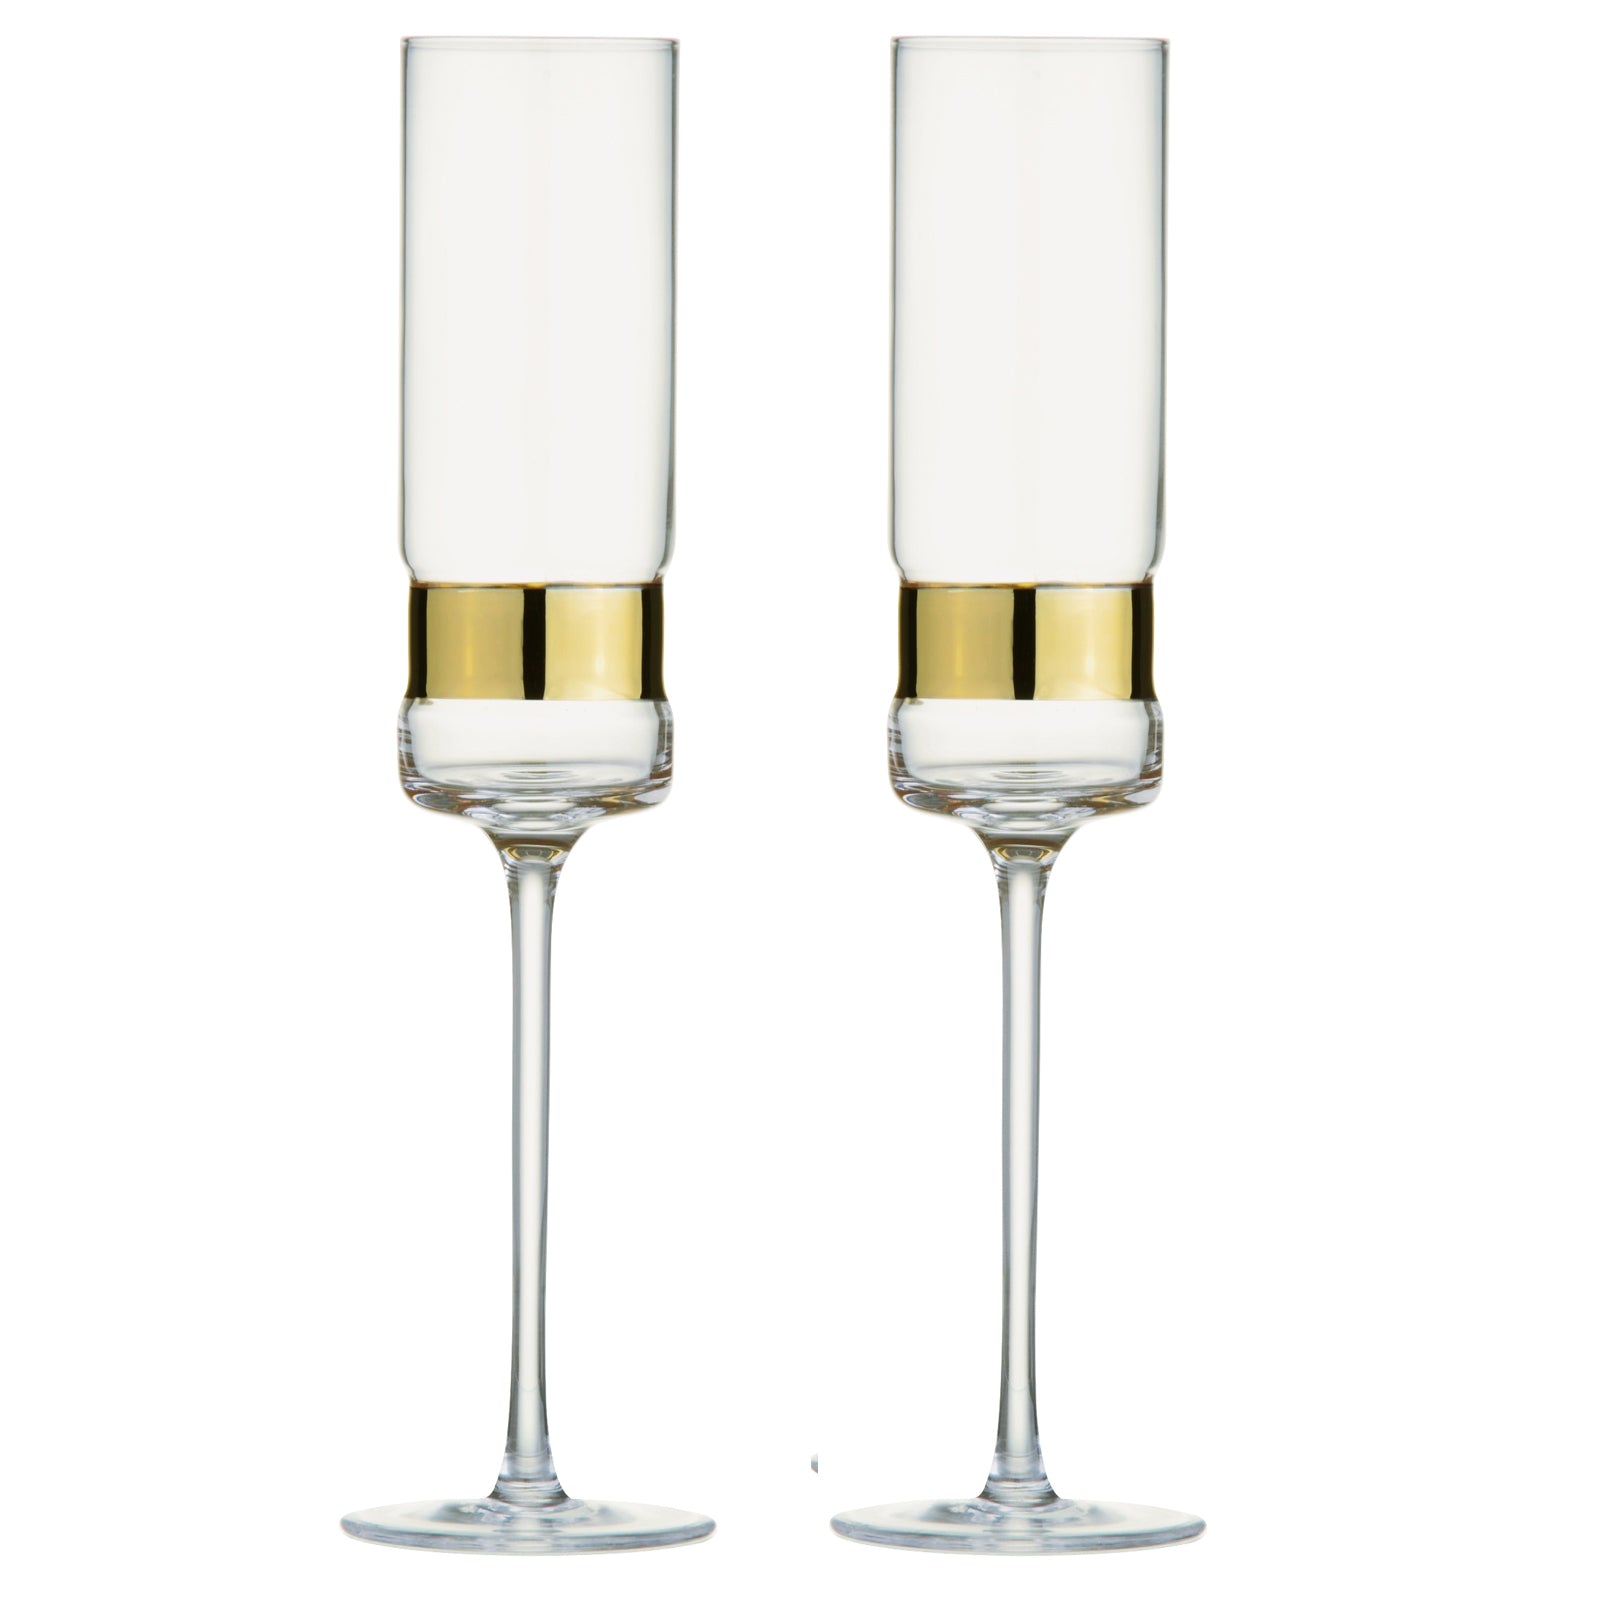 Anton Studio Designs SoHo Gold Champagne Flutes, Set of 2